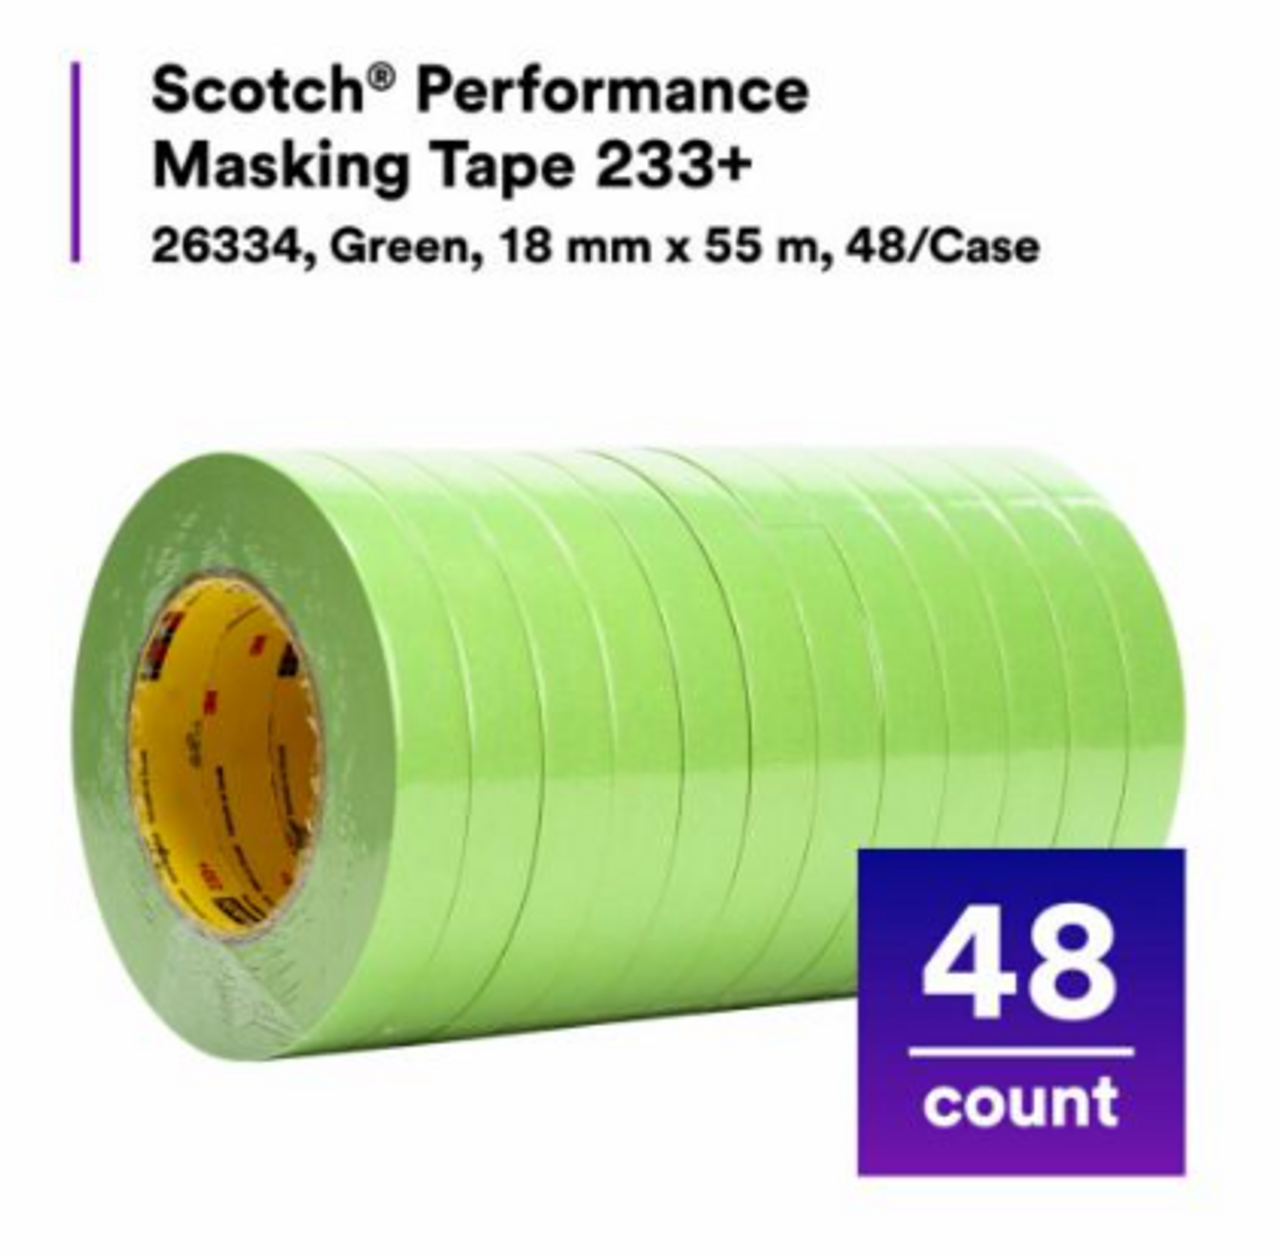 Scotch® Performance Masking Tape Green, 18 mm x 55 m, 48/Case